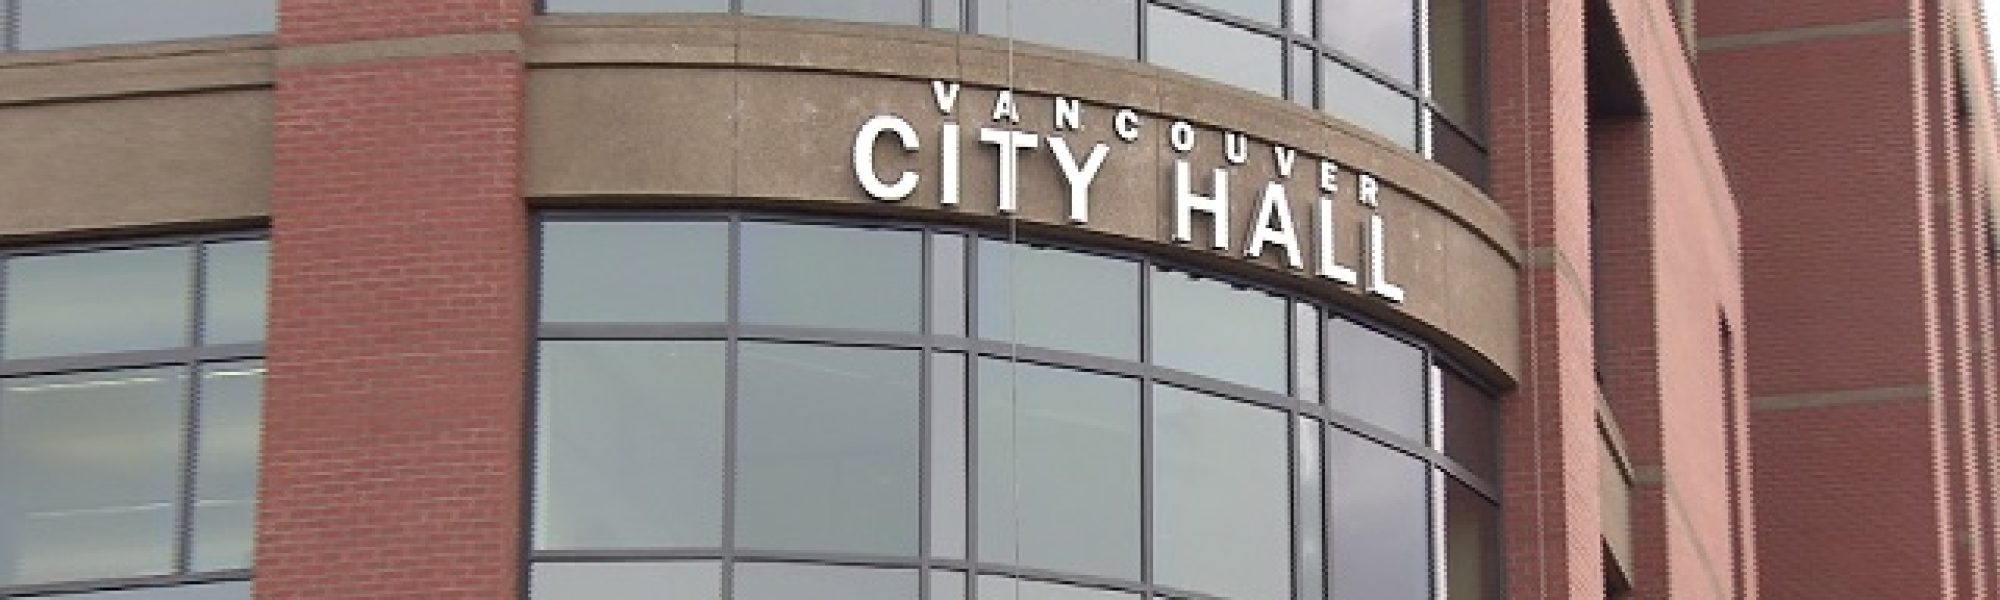 Vancouver City Council bans large fossil fuel facilities